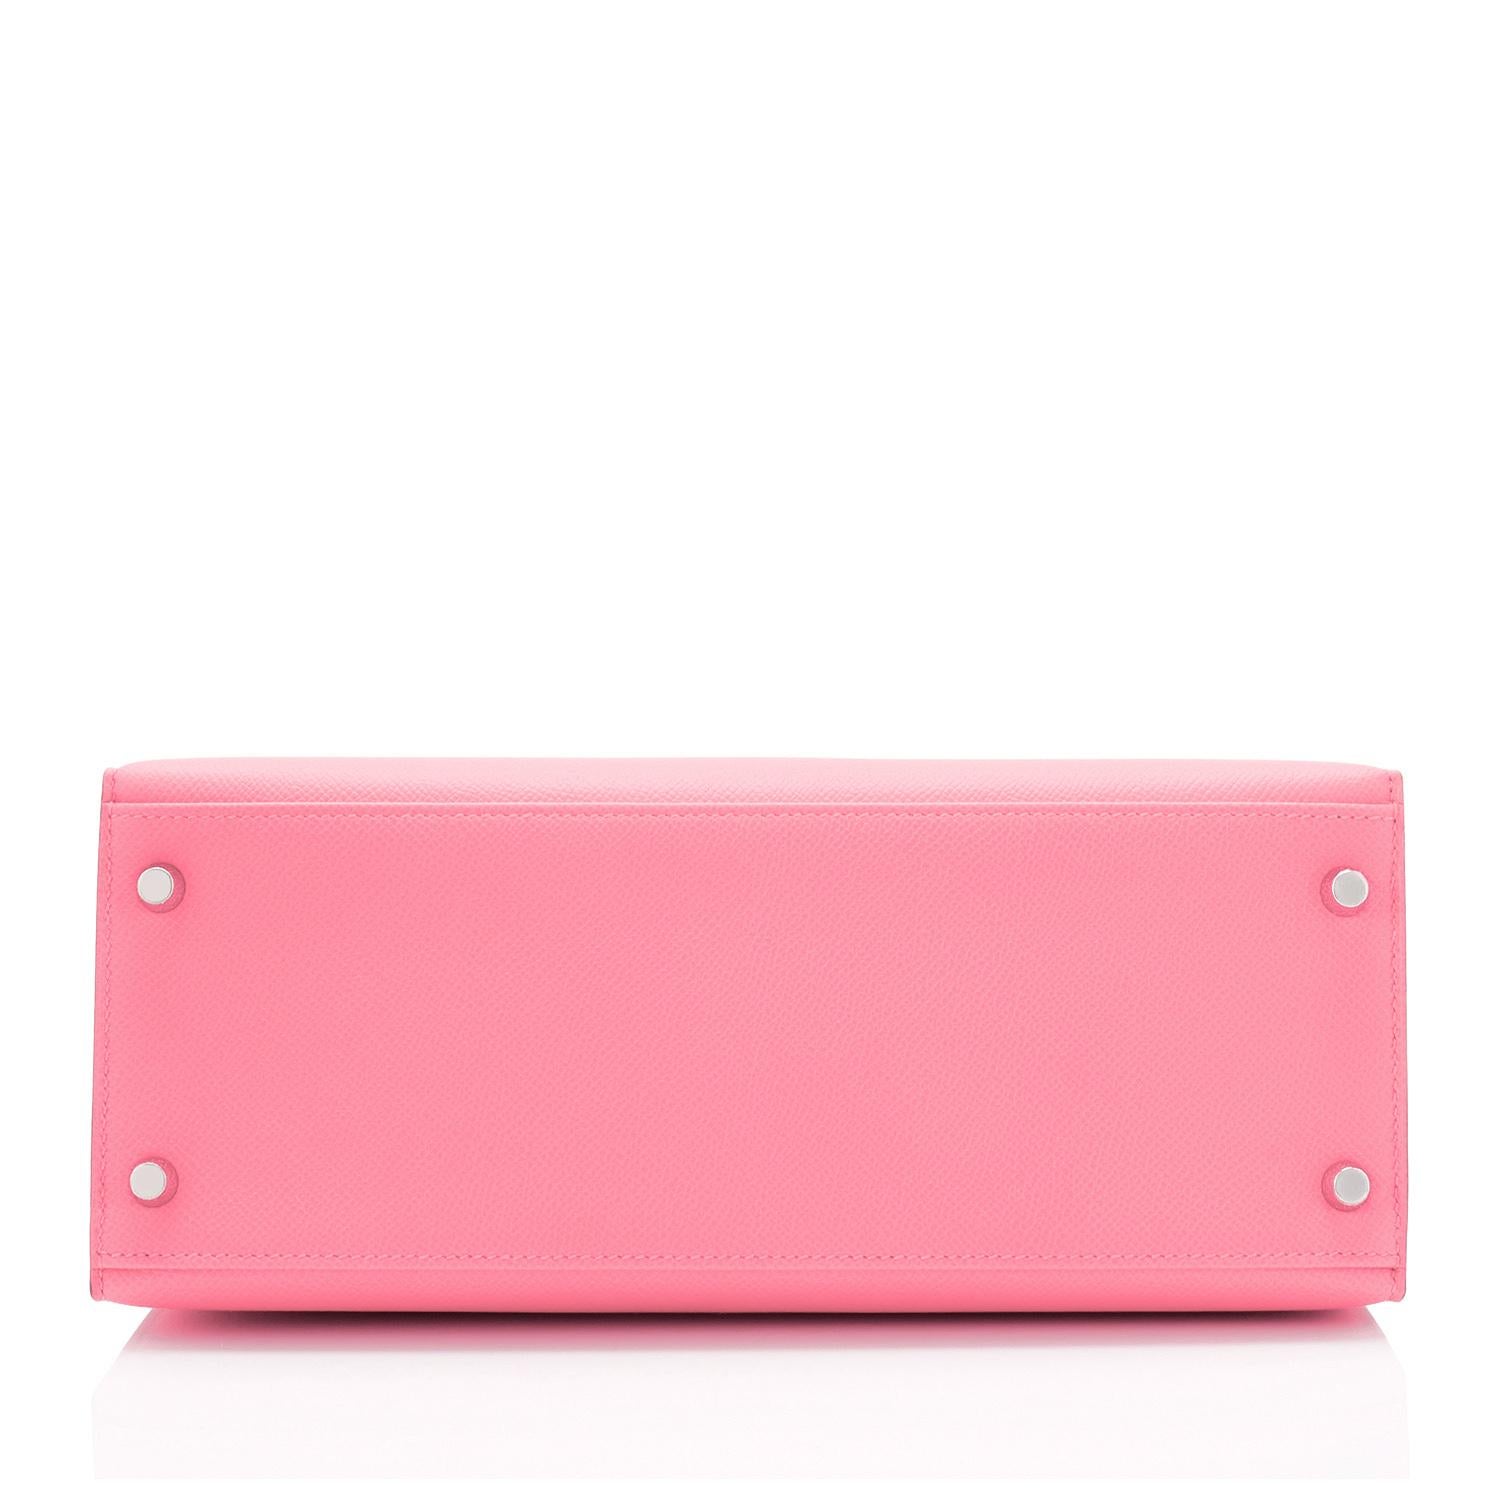 Hermes Kelly 28cm Rose Confetti Pink Sellier Shoulder Bag NEW IN BOX 1